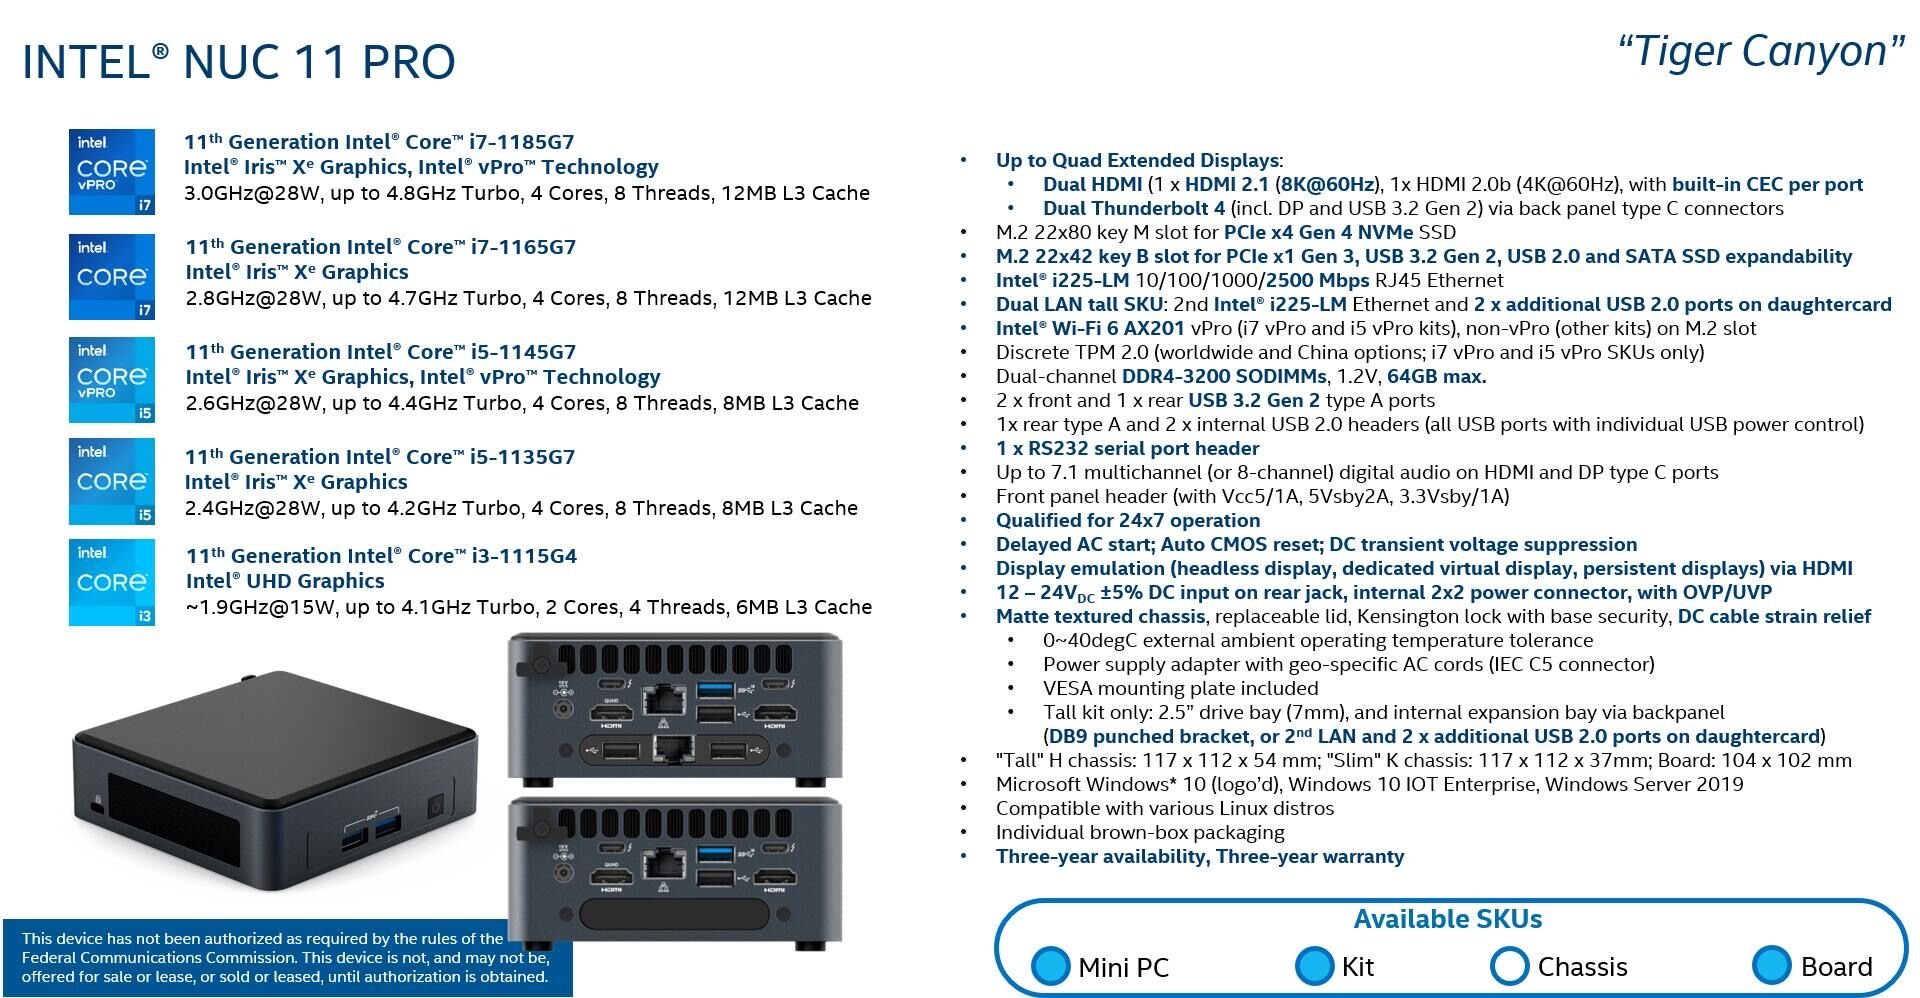 Intel “Tiger Canyon” NUC 11 Pro specifications have leaked | KitGuru